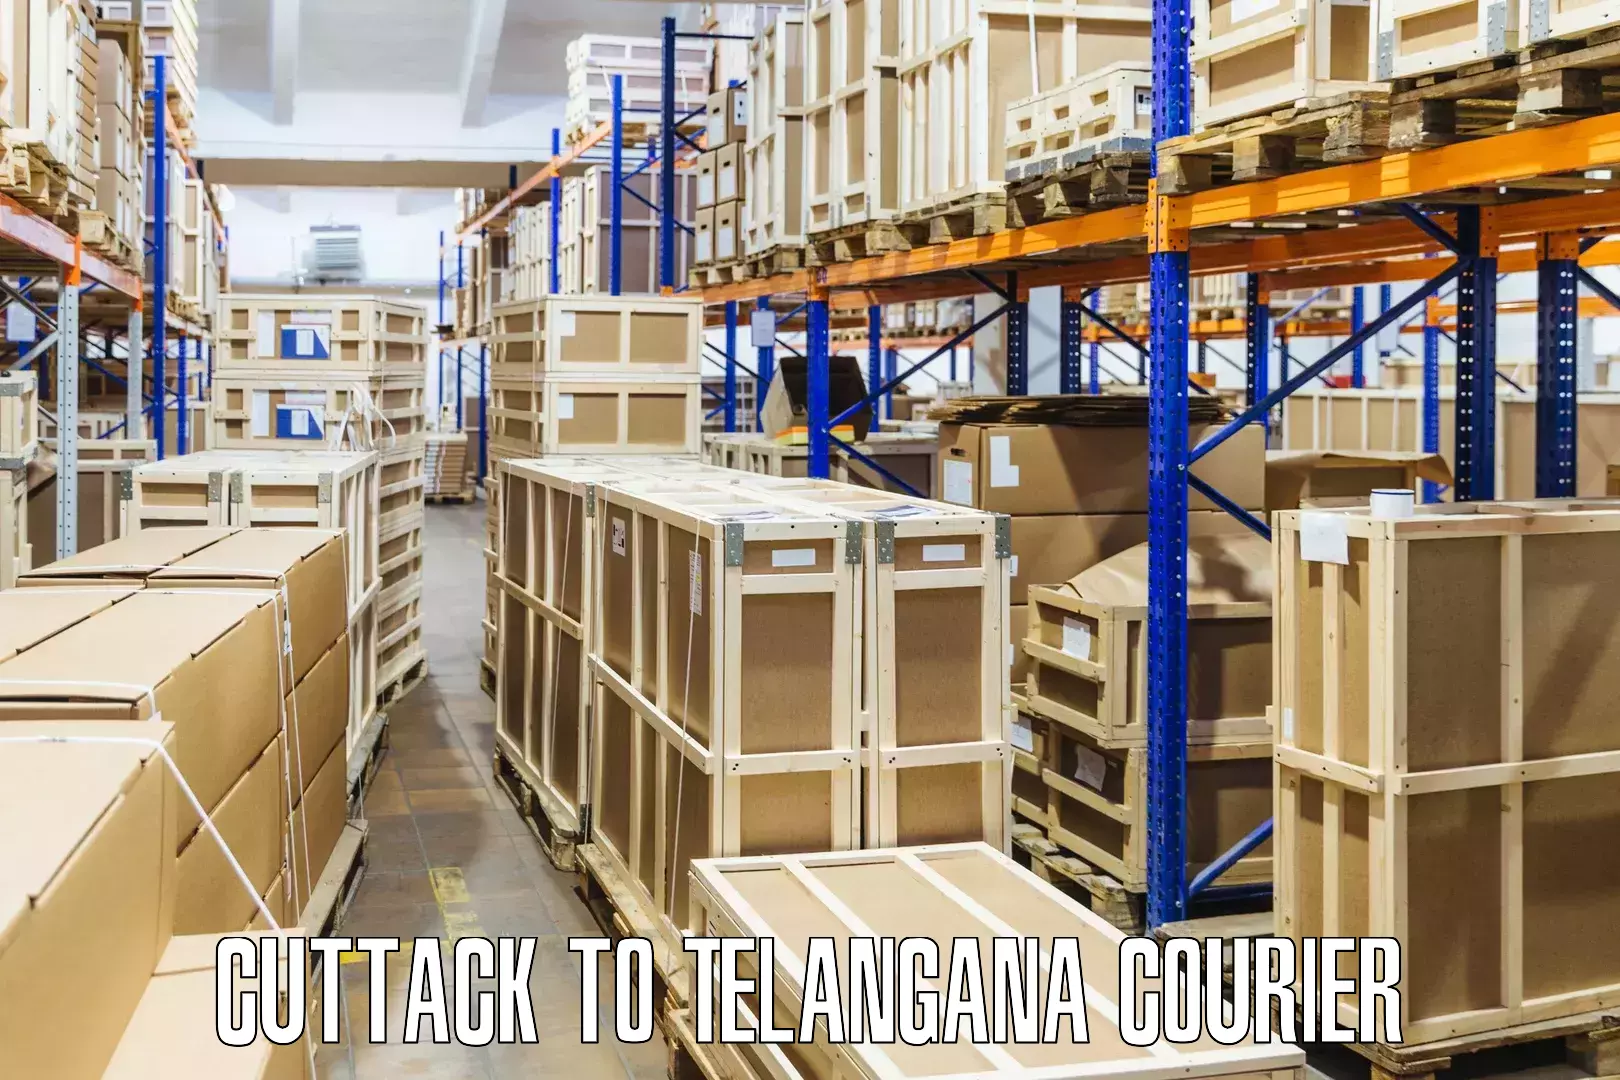 Cross-border shipping Cuttack to Telangana